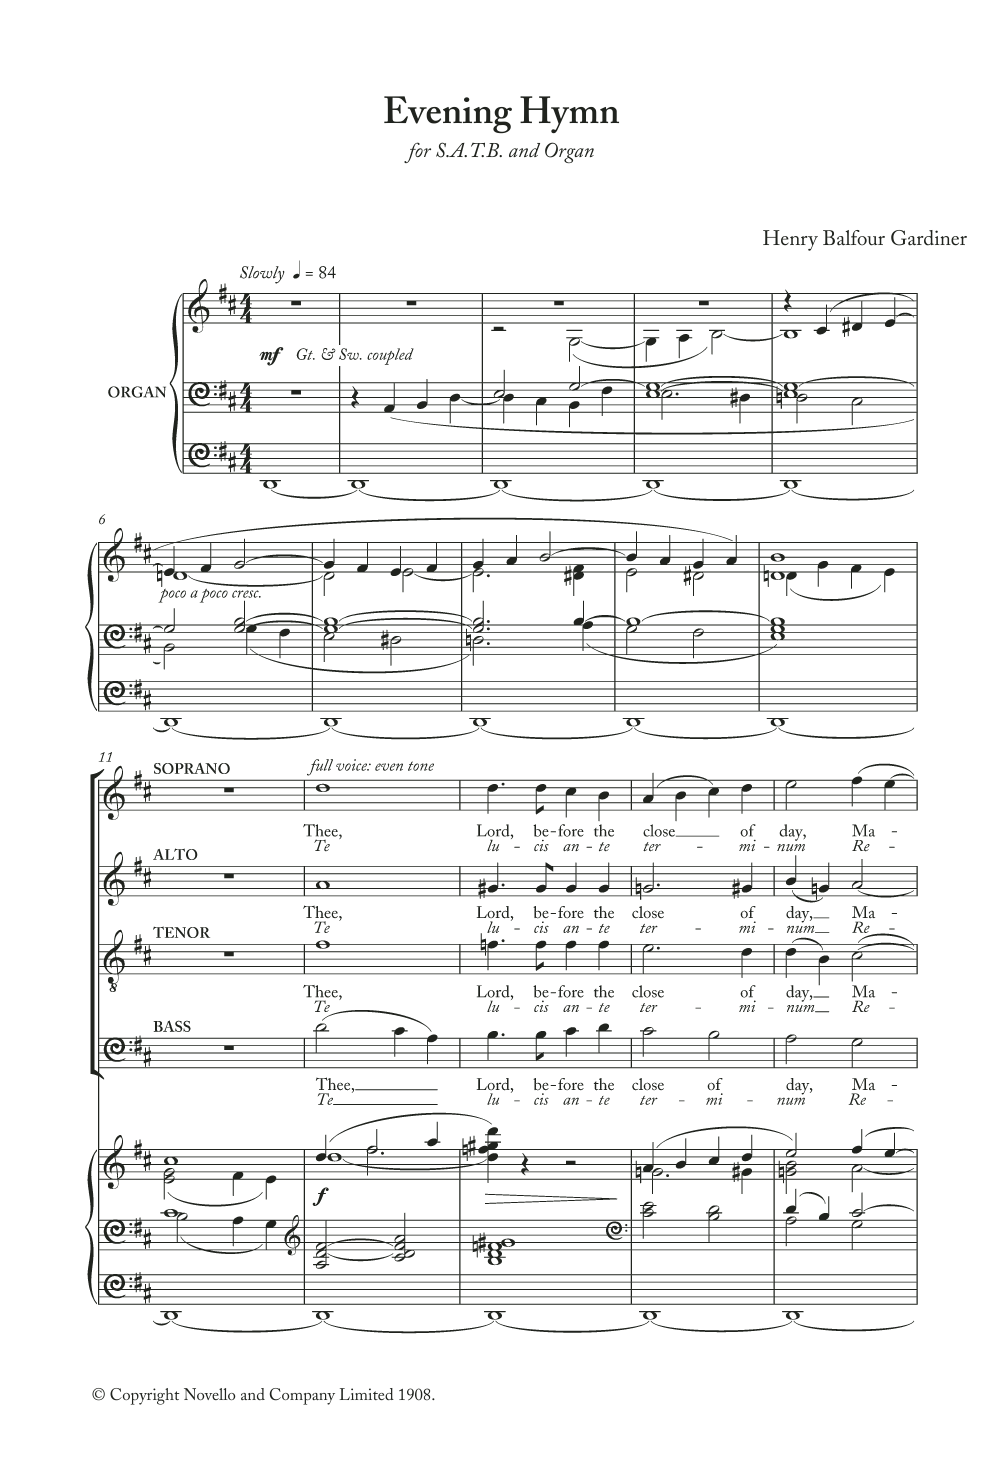 Henry Balfour Gardiner Evening Hymn Sheet Music Notes & Chords for Choir - Download or Print PDF